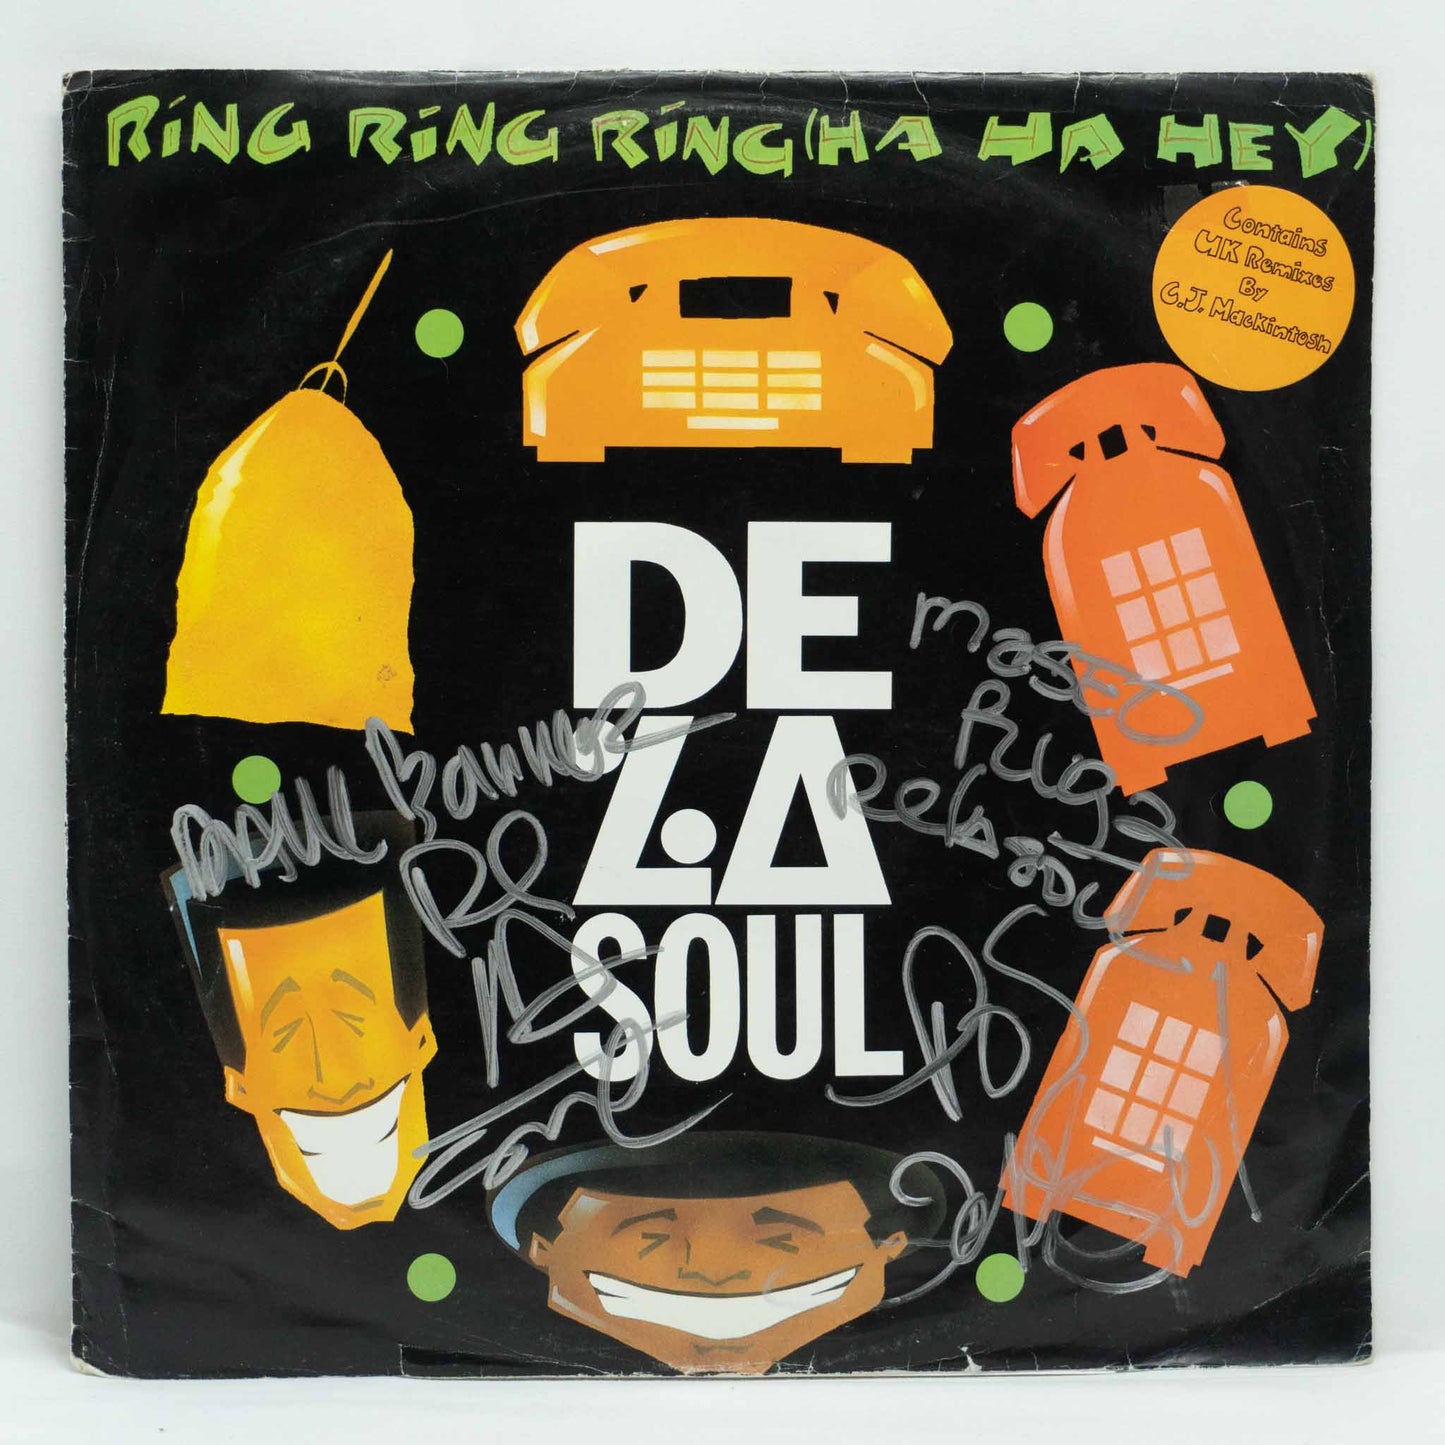 De La Soul – Ring Ring Ring (Ha Ha Hey) (Signed by all 3 members)